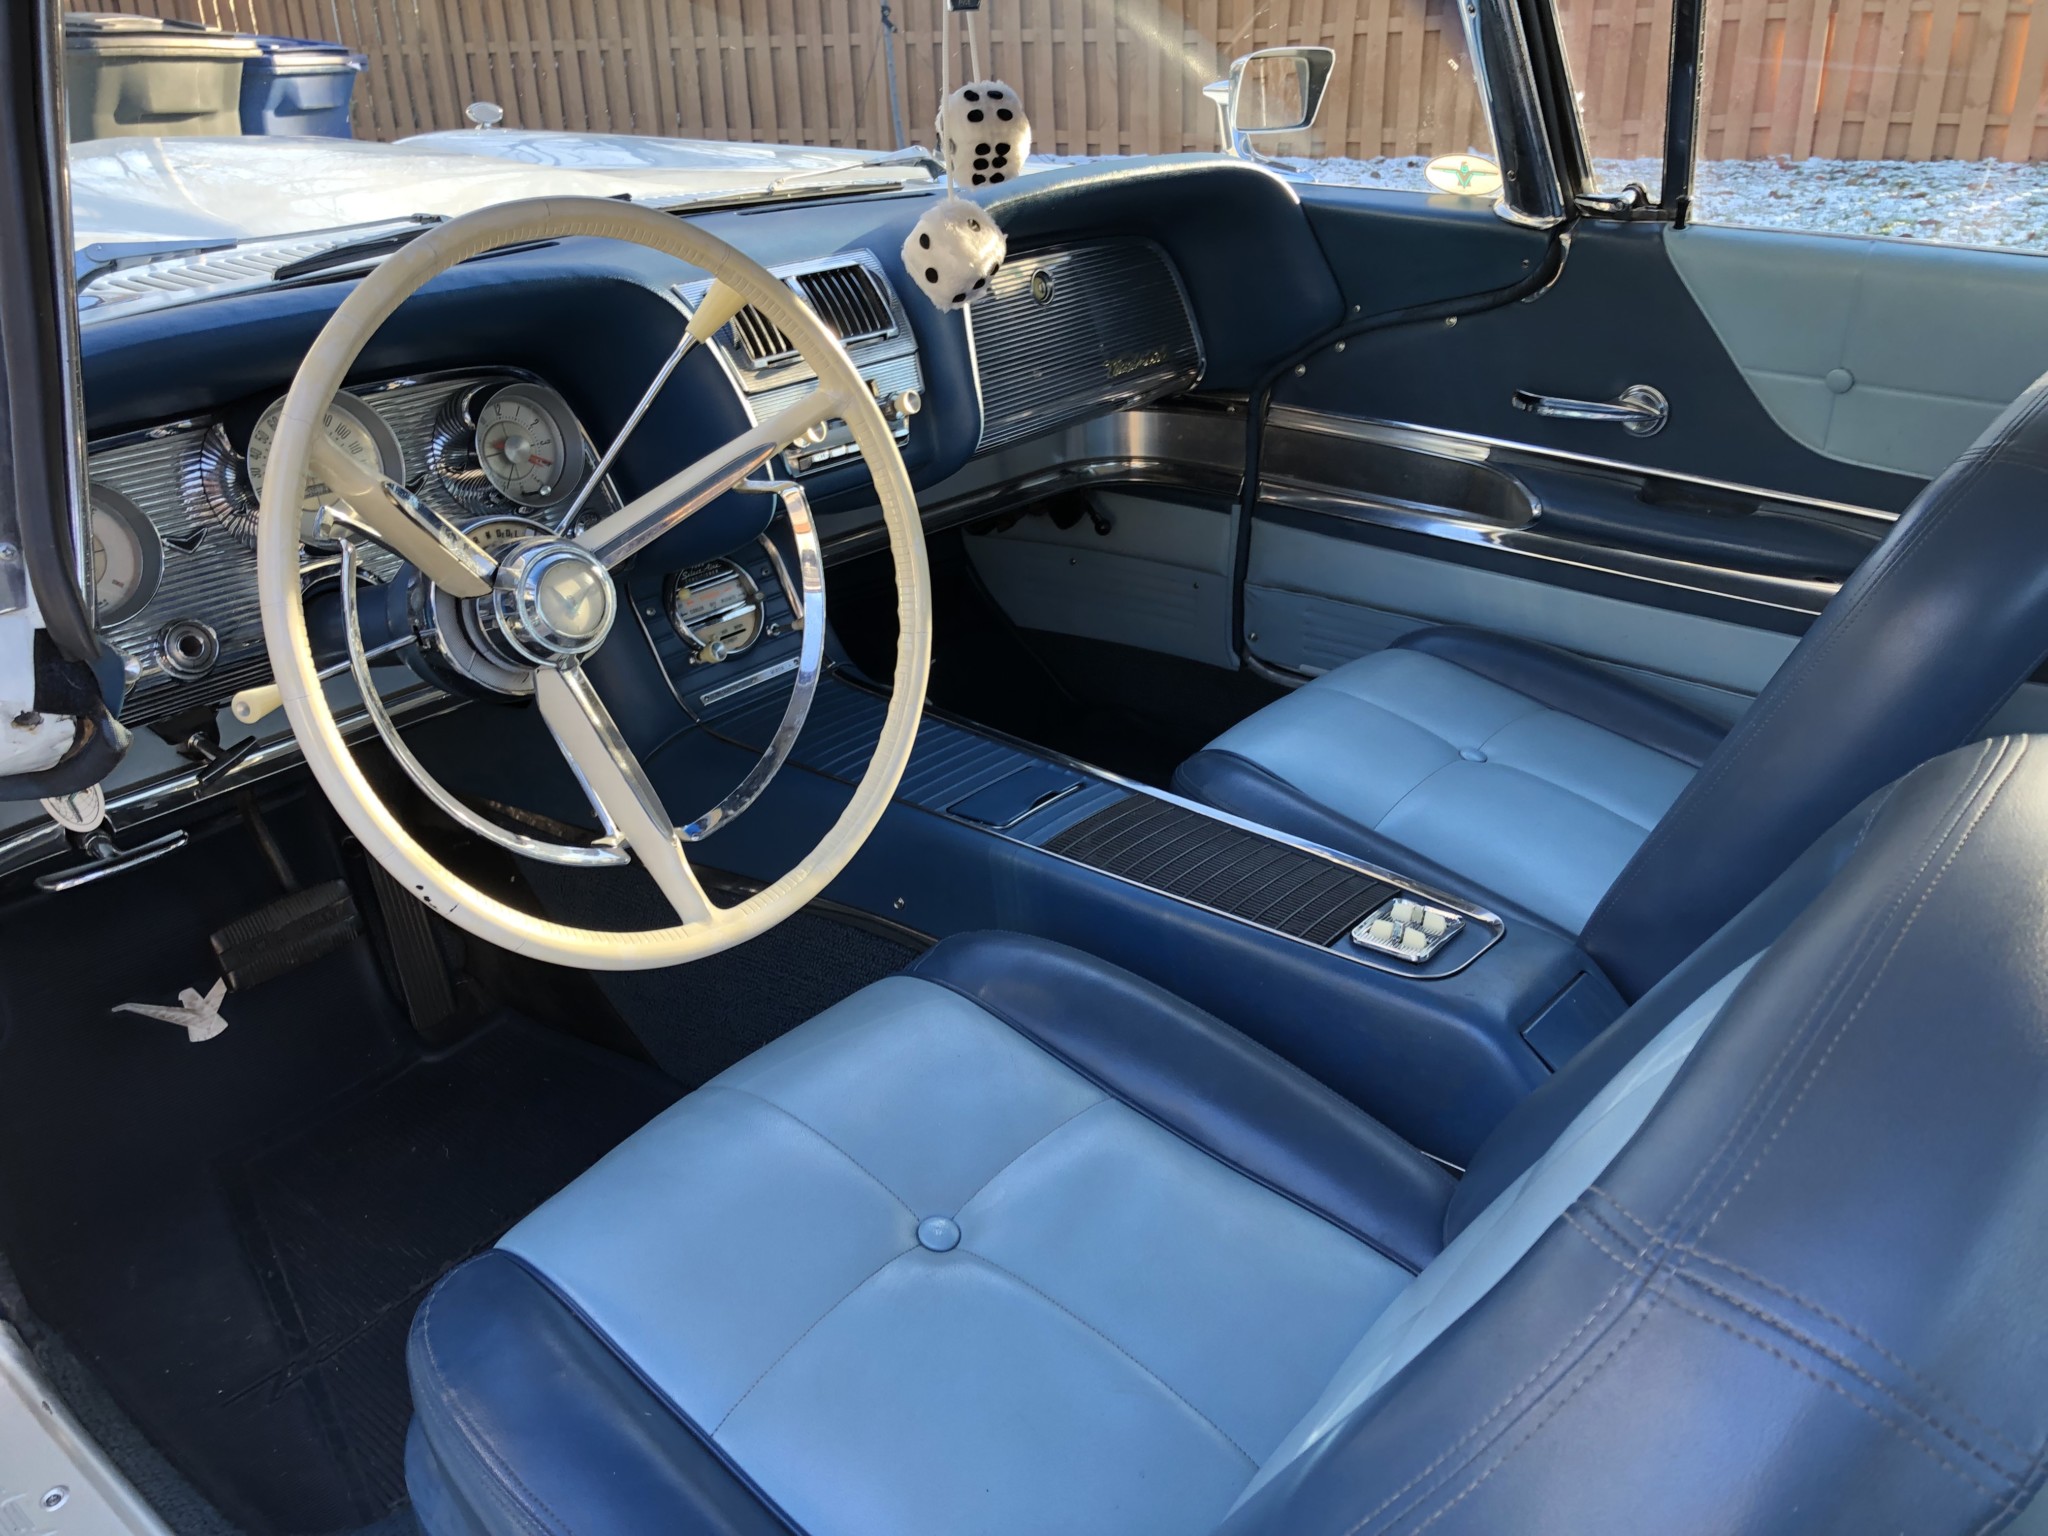 1960 Ford Thunderbird Driver's Side Interior